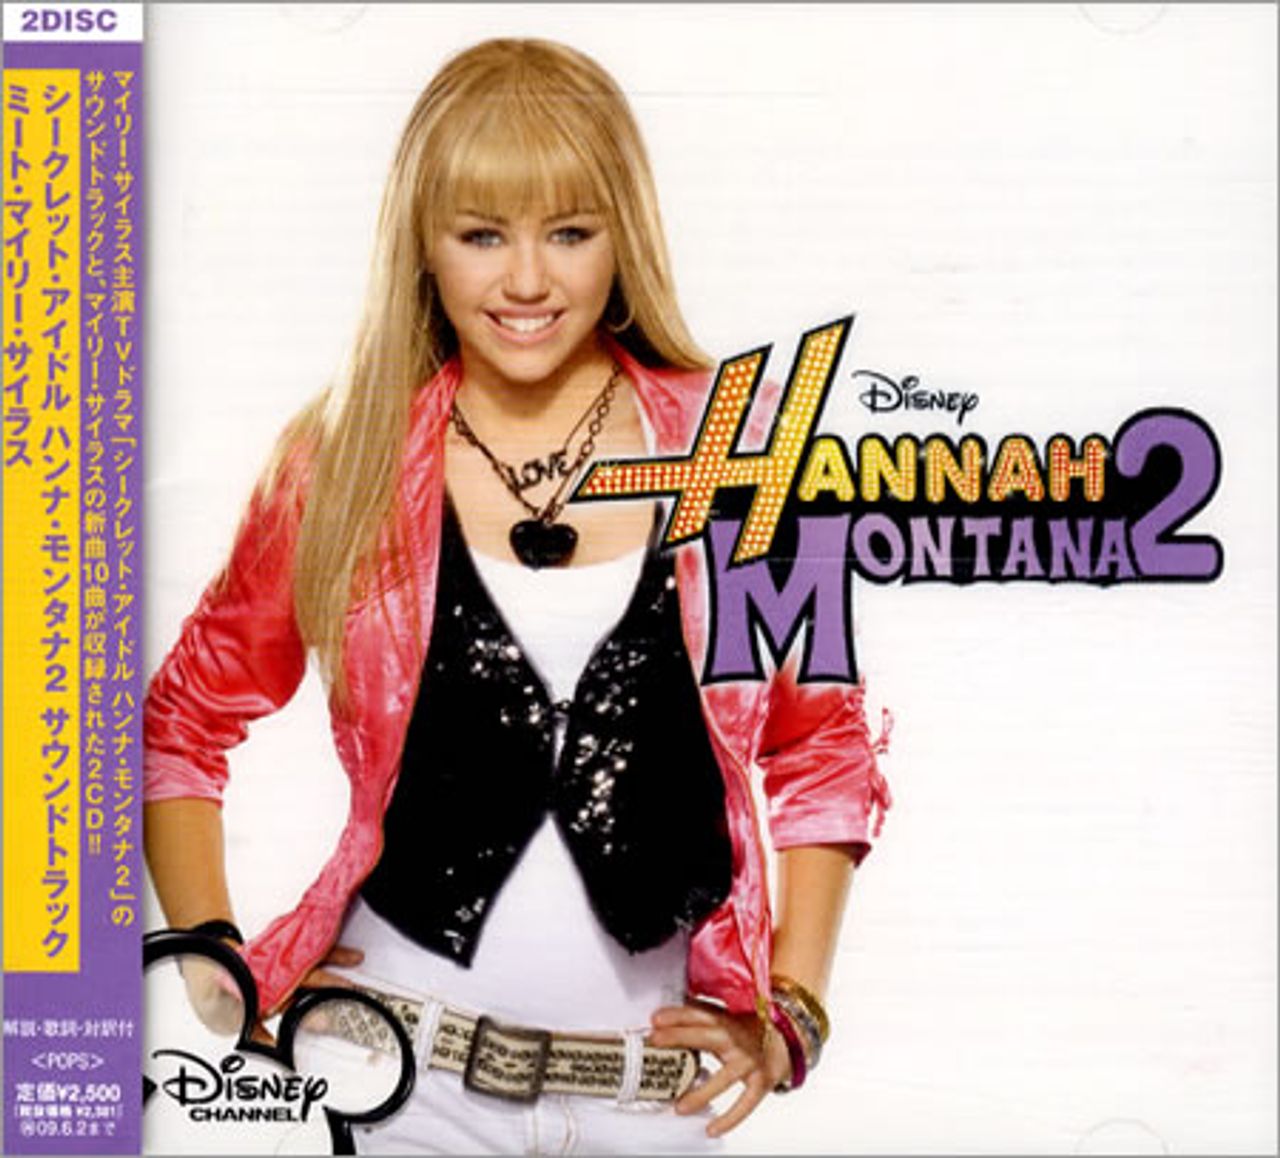 Miley Cyrus Hannah Montana 2/Meet Miley Cyrus Japanese Promo CD album